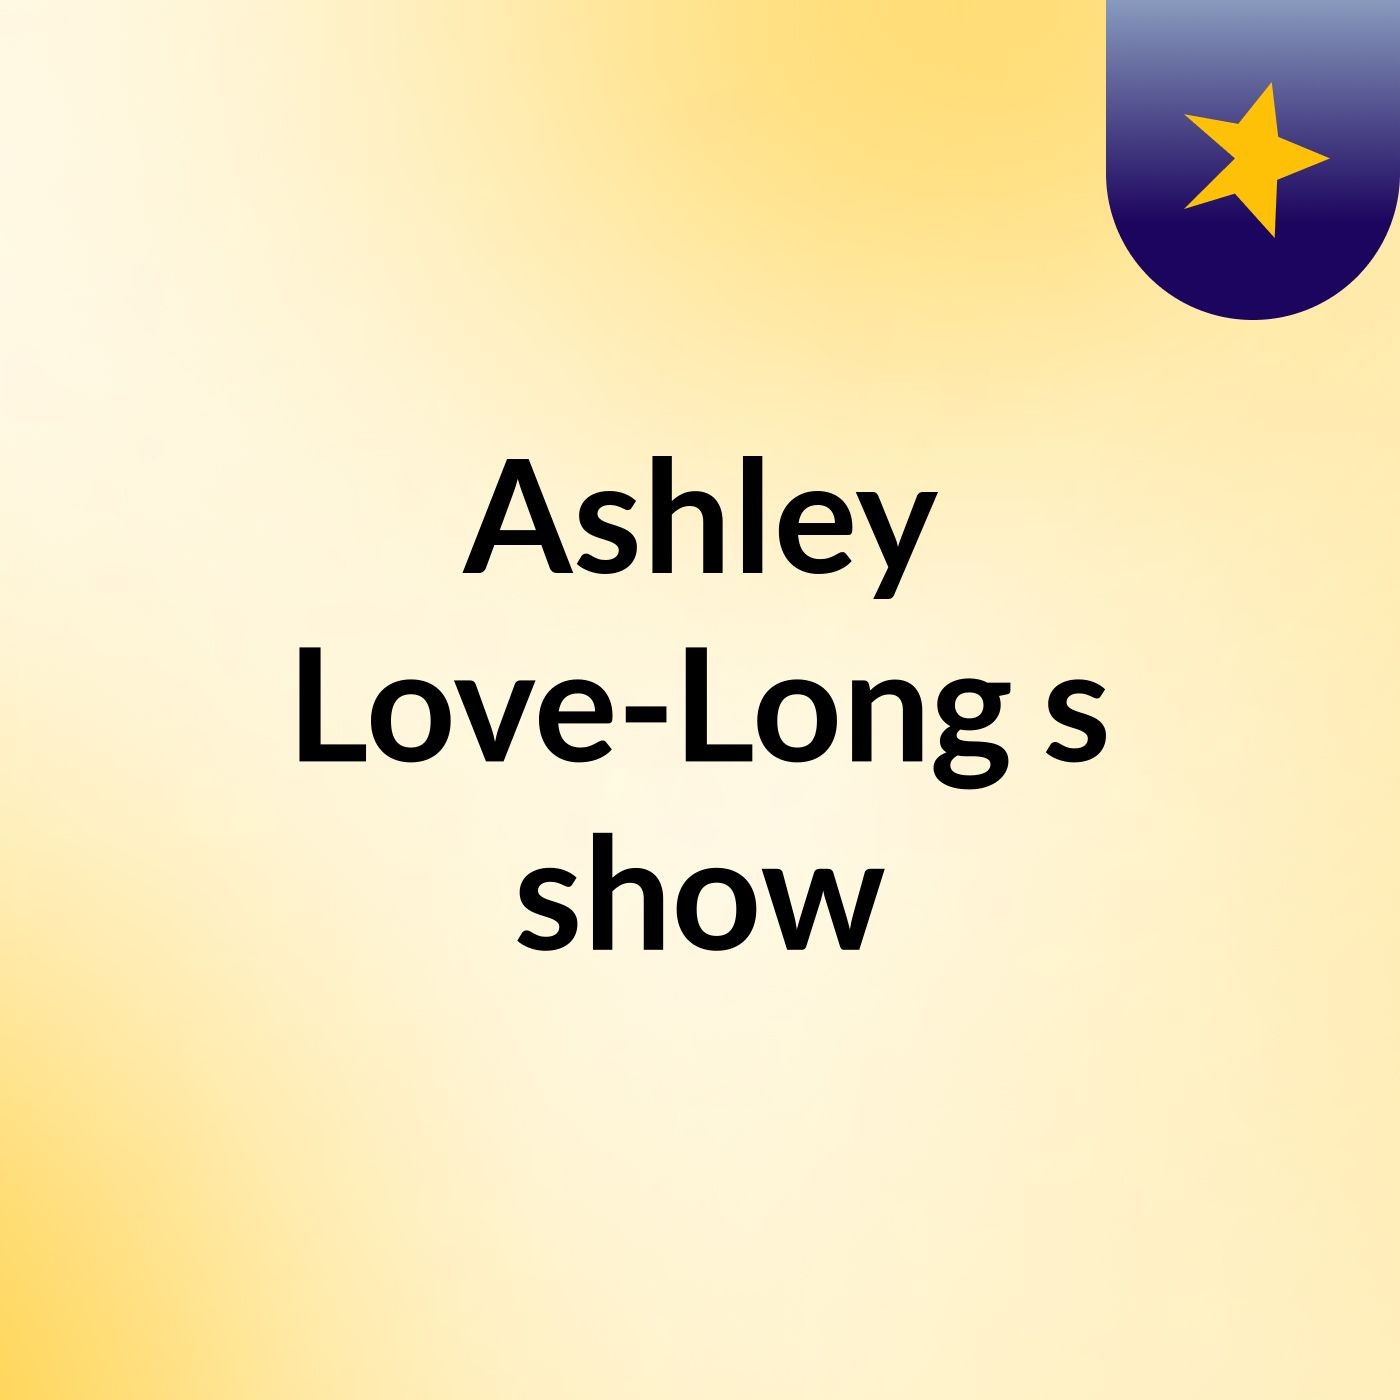 Episode 2 - Ashley Love-Long's show